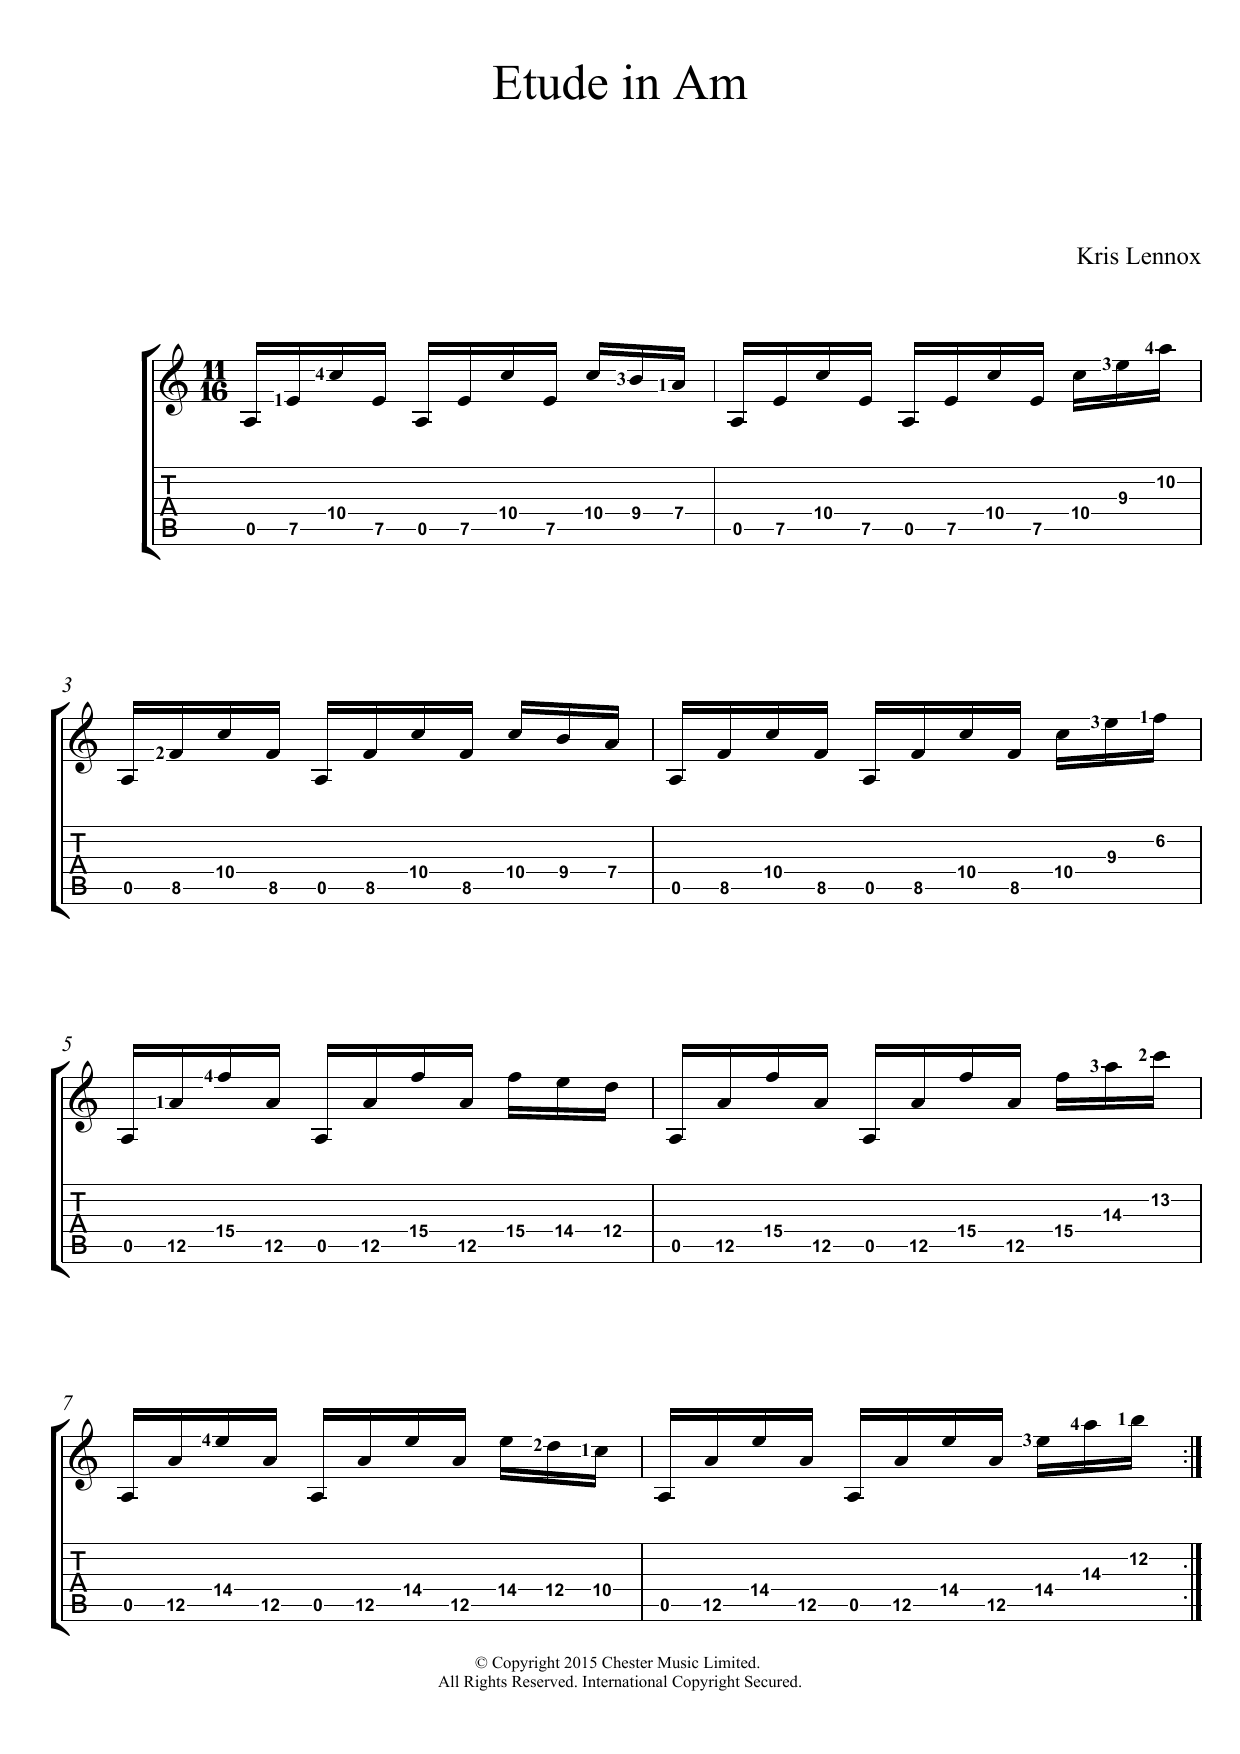 Kris Lennox Etude In Am Sheet Music Notes & Chords for Guitar Tab - Download or Print PDF